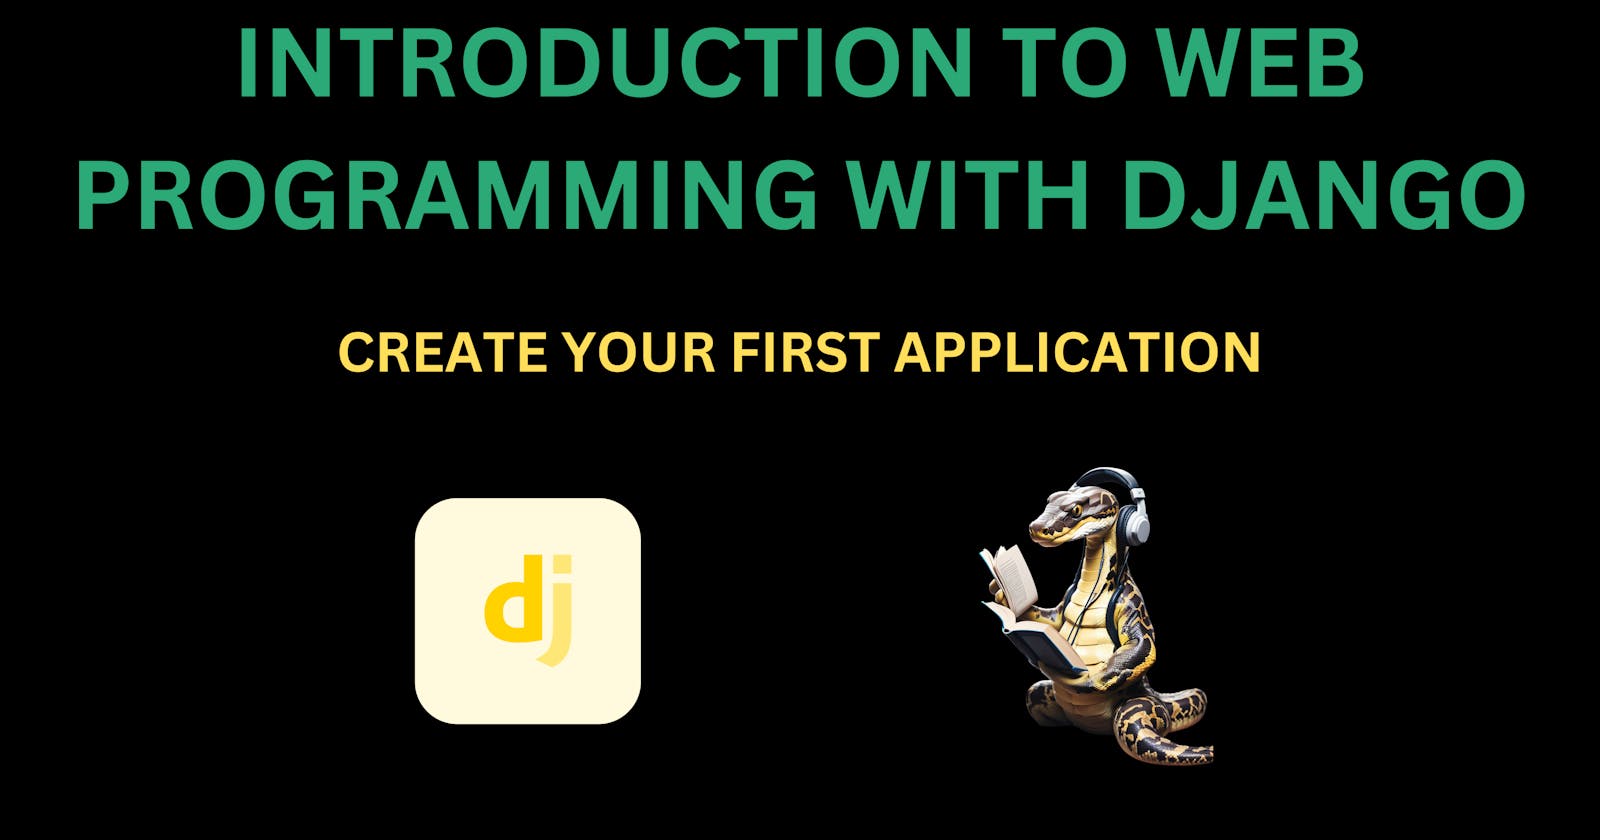 Web Programming with Django - An Introduction